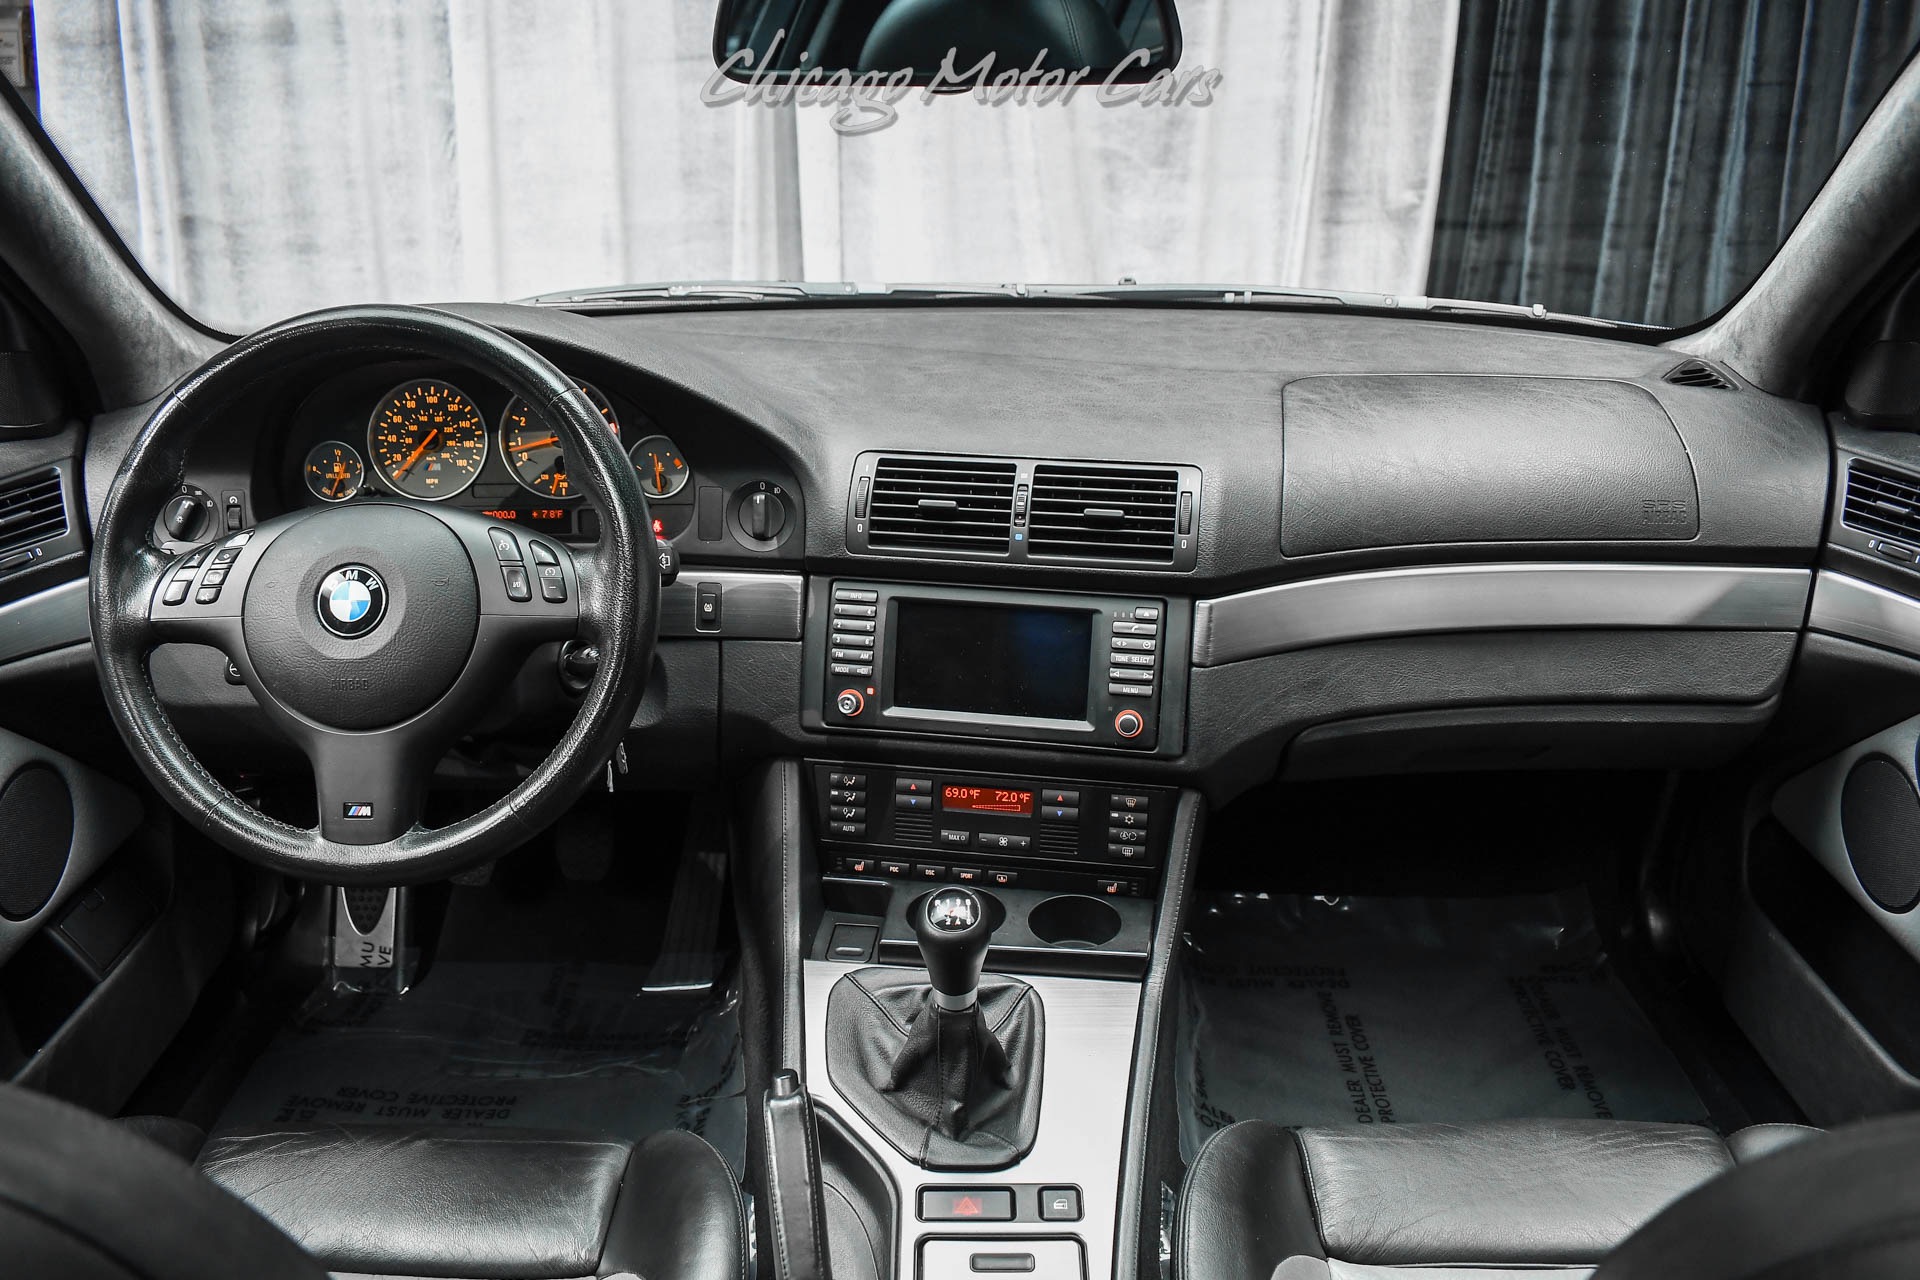 Used 2002 BMW M5 6-Speed Manual! Tastefully Upgraded! 400+ HP